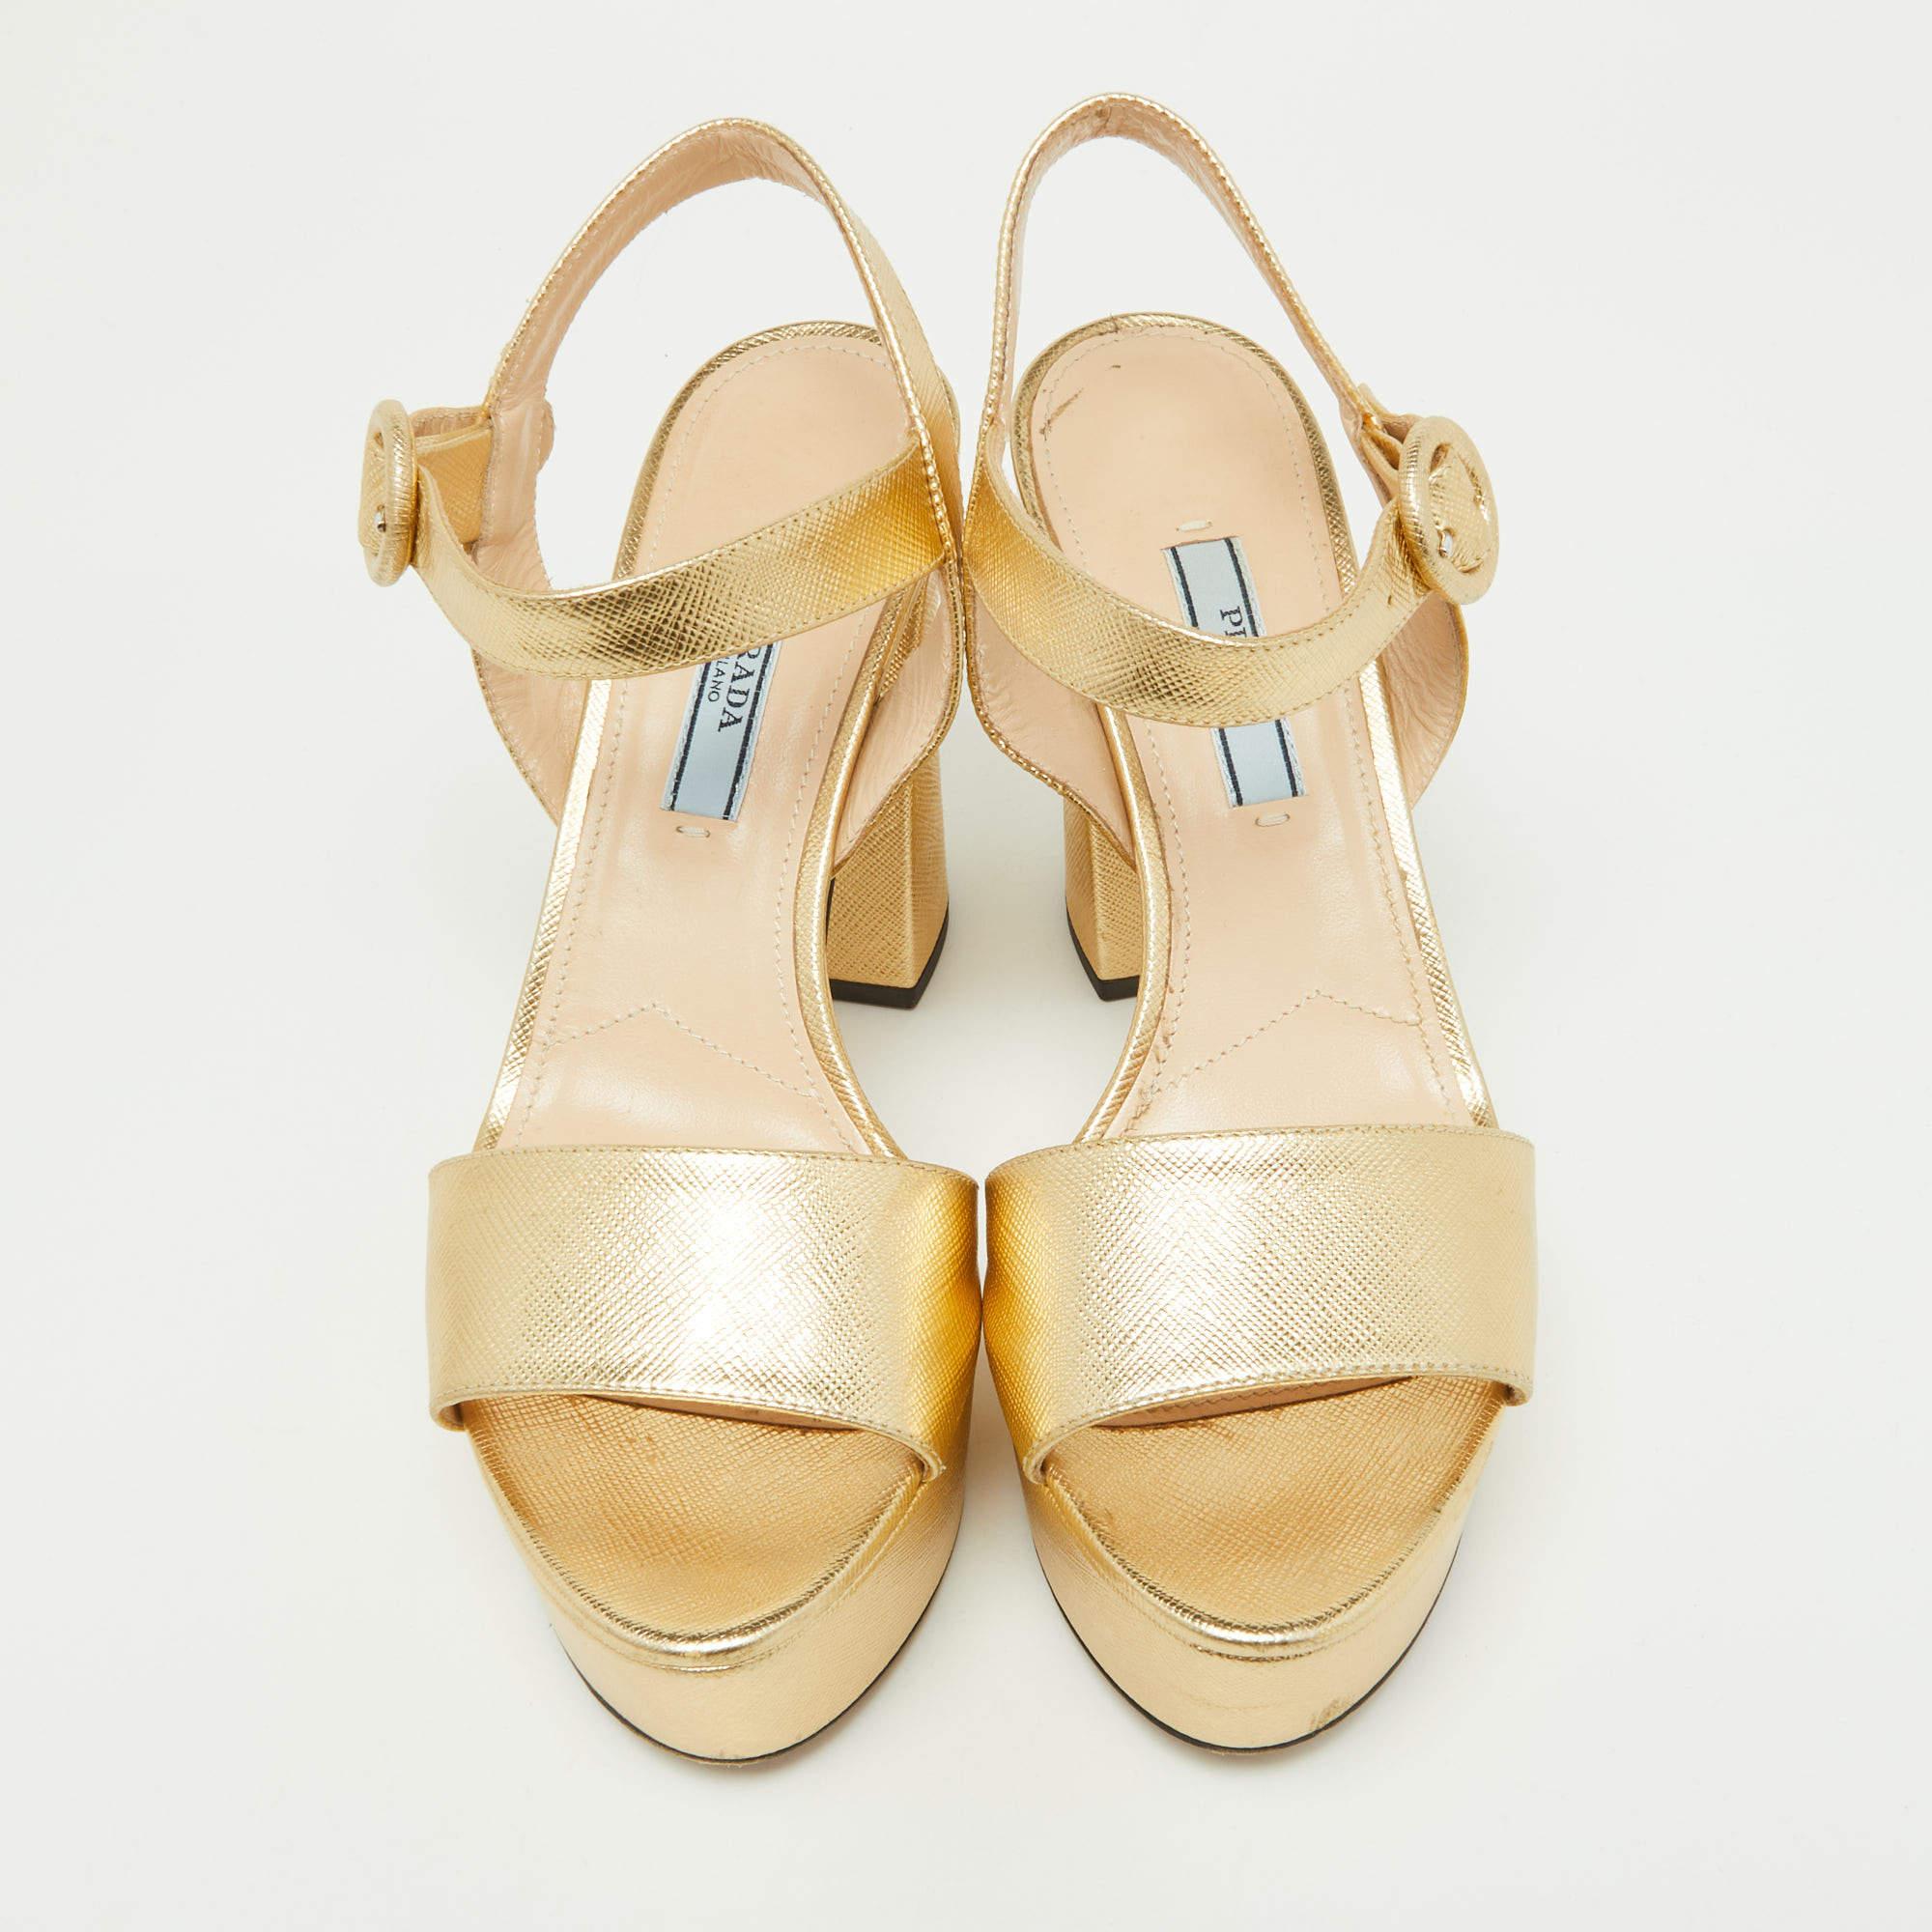 Prada Gold Leather Ankle Strap Block Heel Platform Sandals Size 36 2